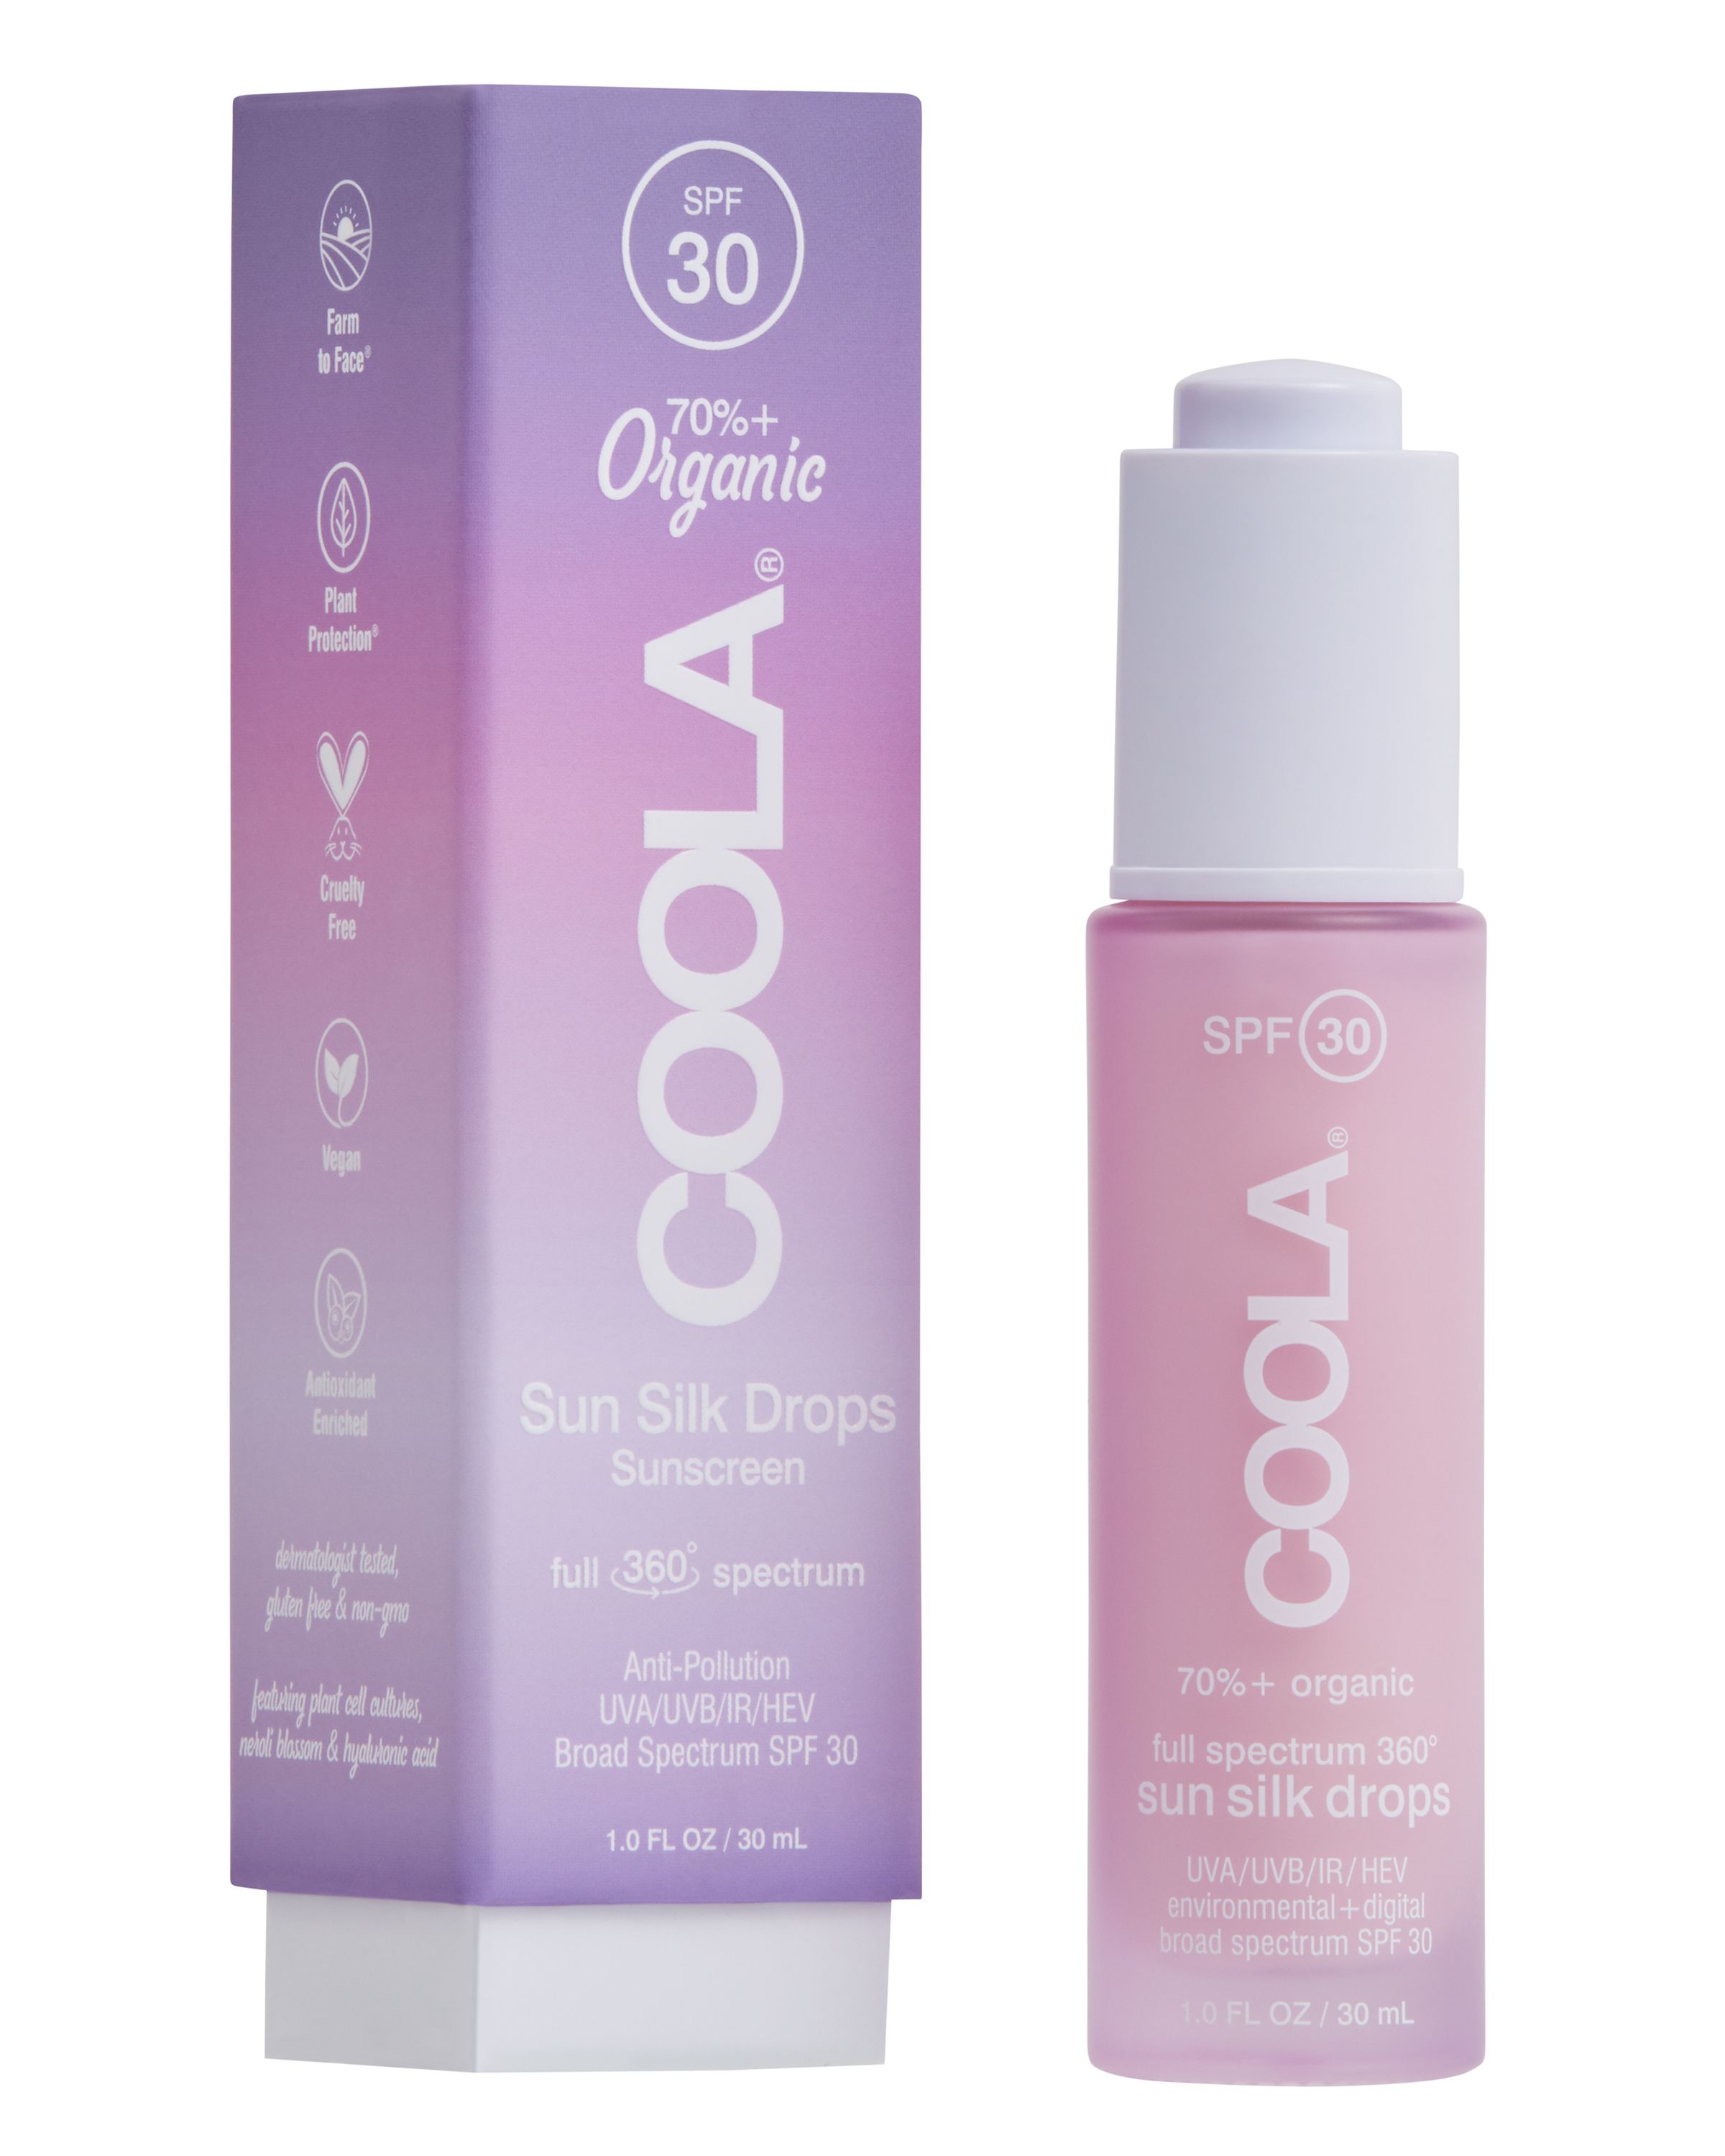 COOLA Full Spectrum 360° Sun Silk Drops Organic Face Sunscreen, SPF 30 - 1 fl oz